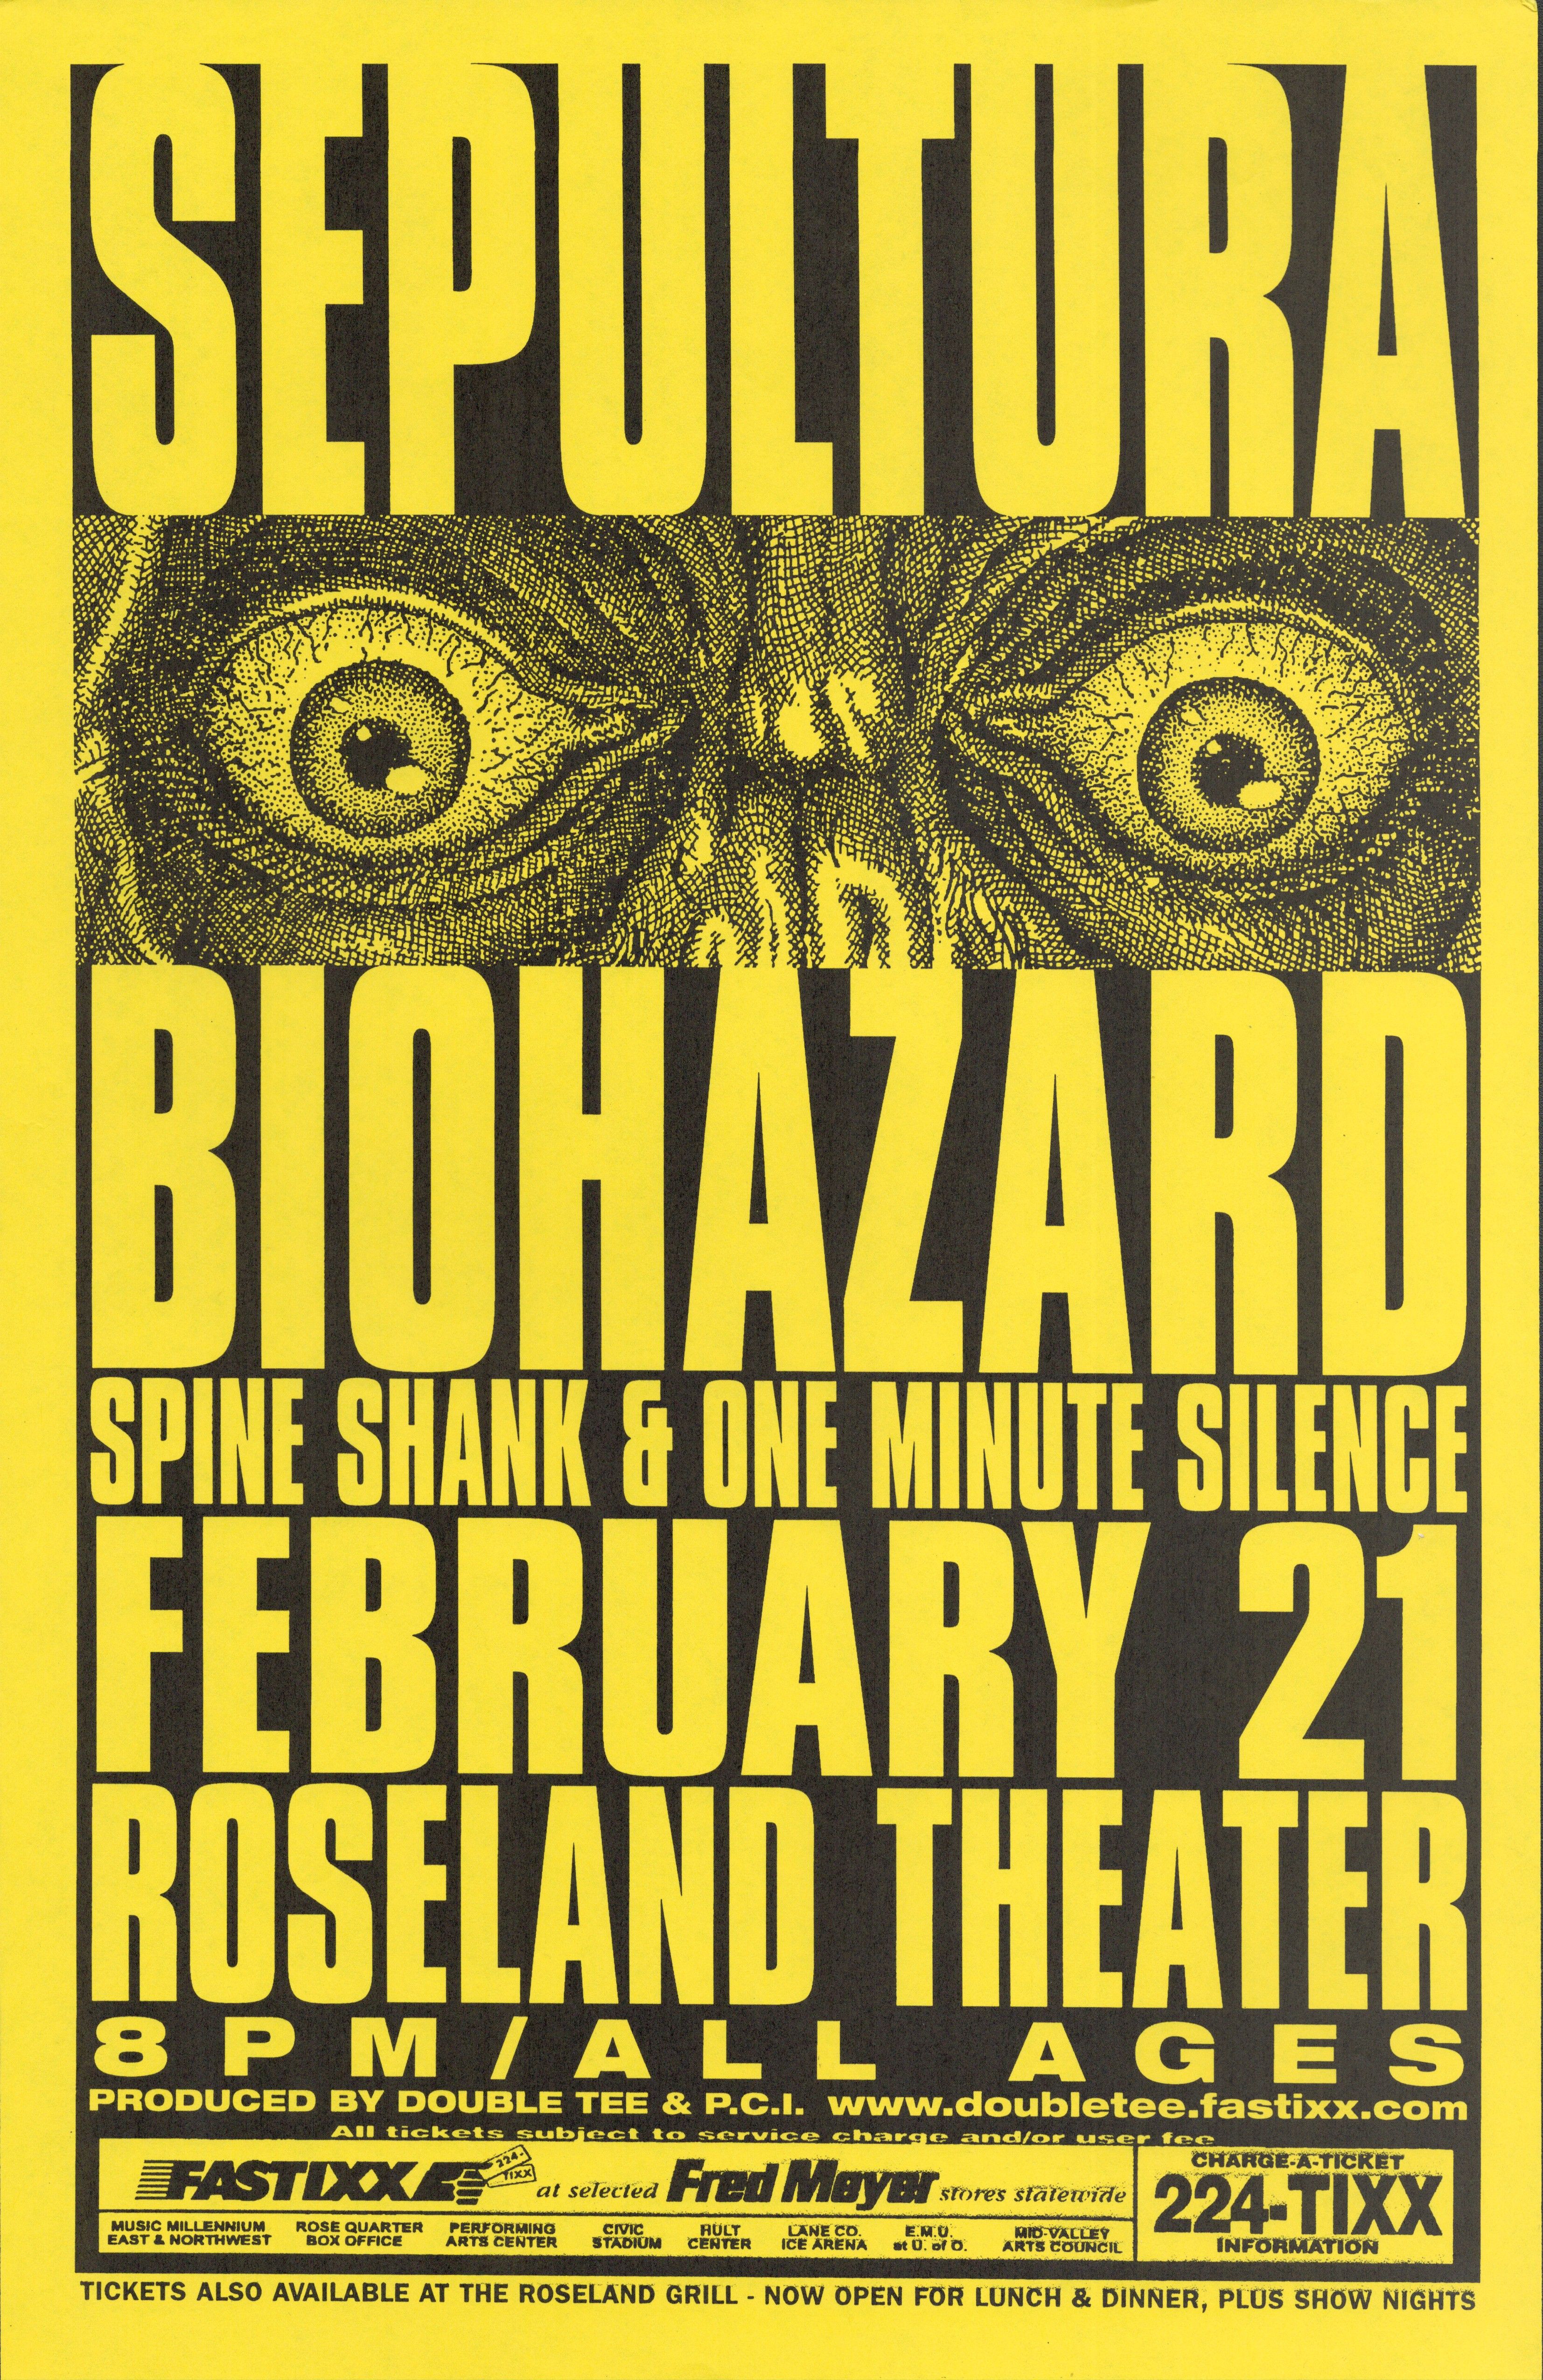 MXP-221.5 Sepultura Roseland Theater 1999 Concert Poster